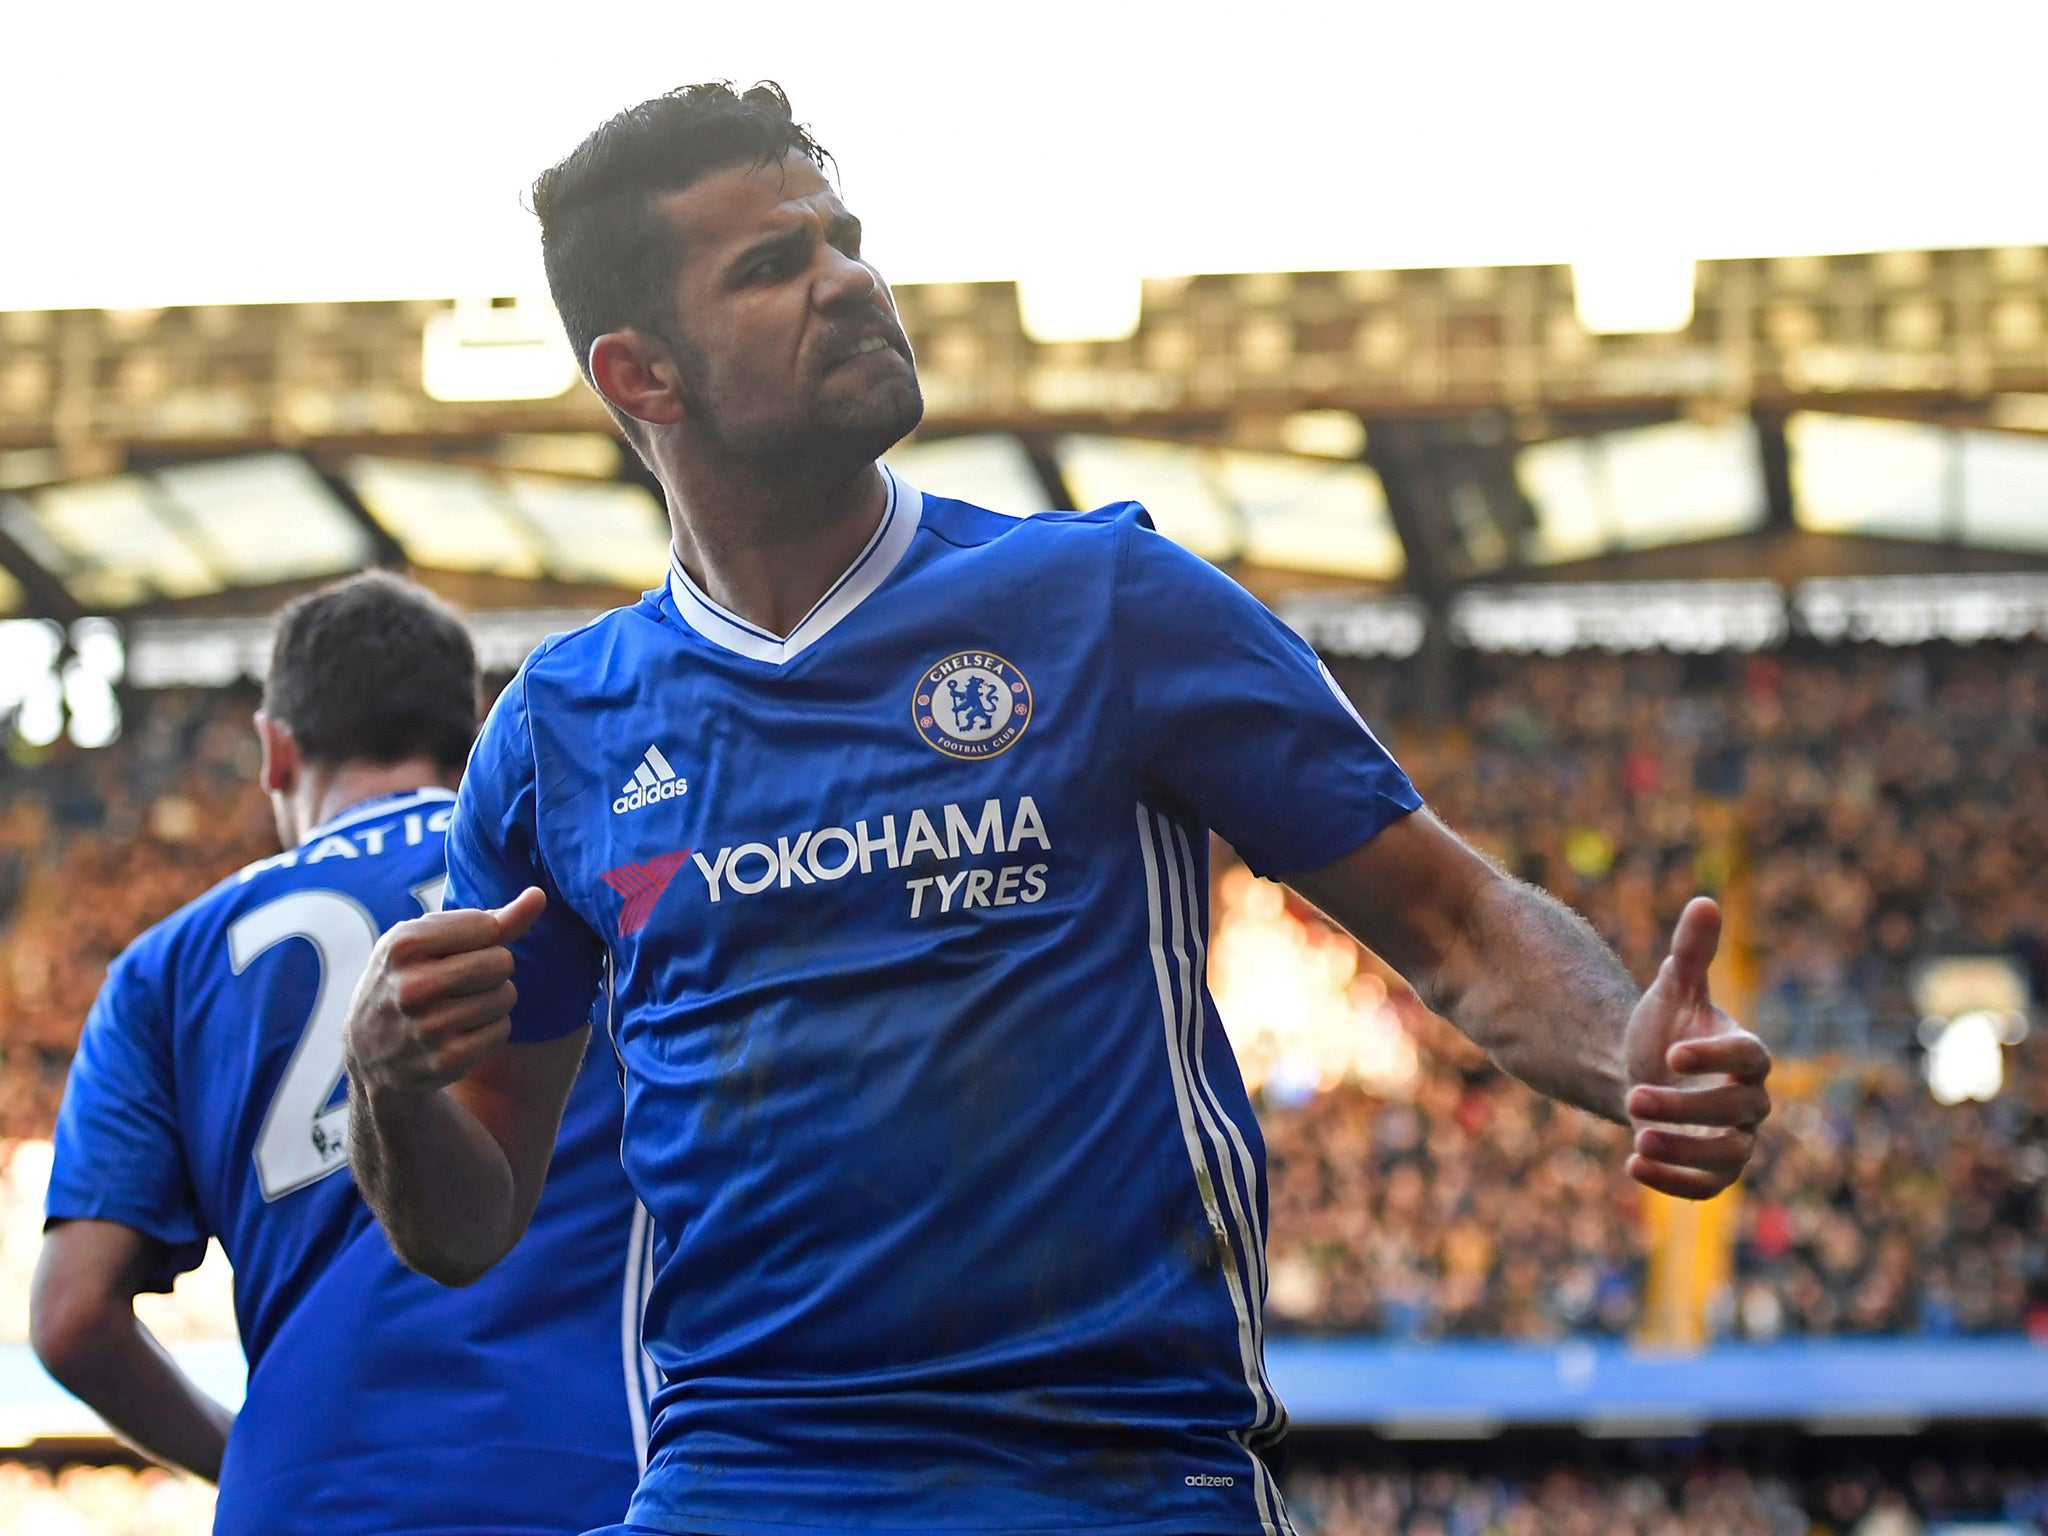 Costa found the breakthrough with a brilliant finish